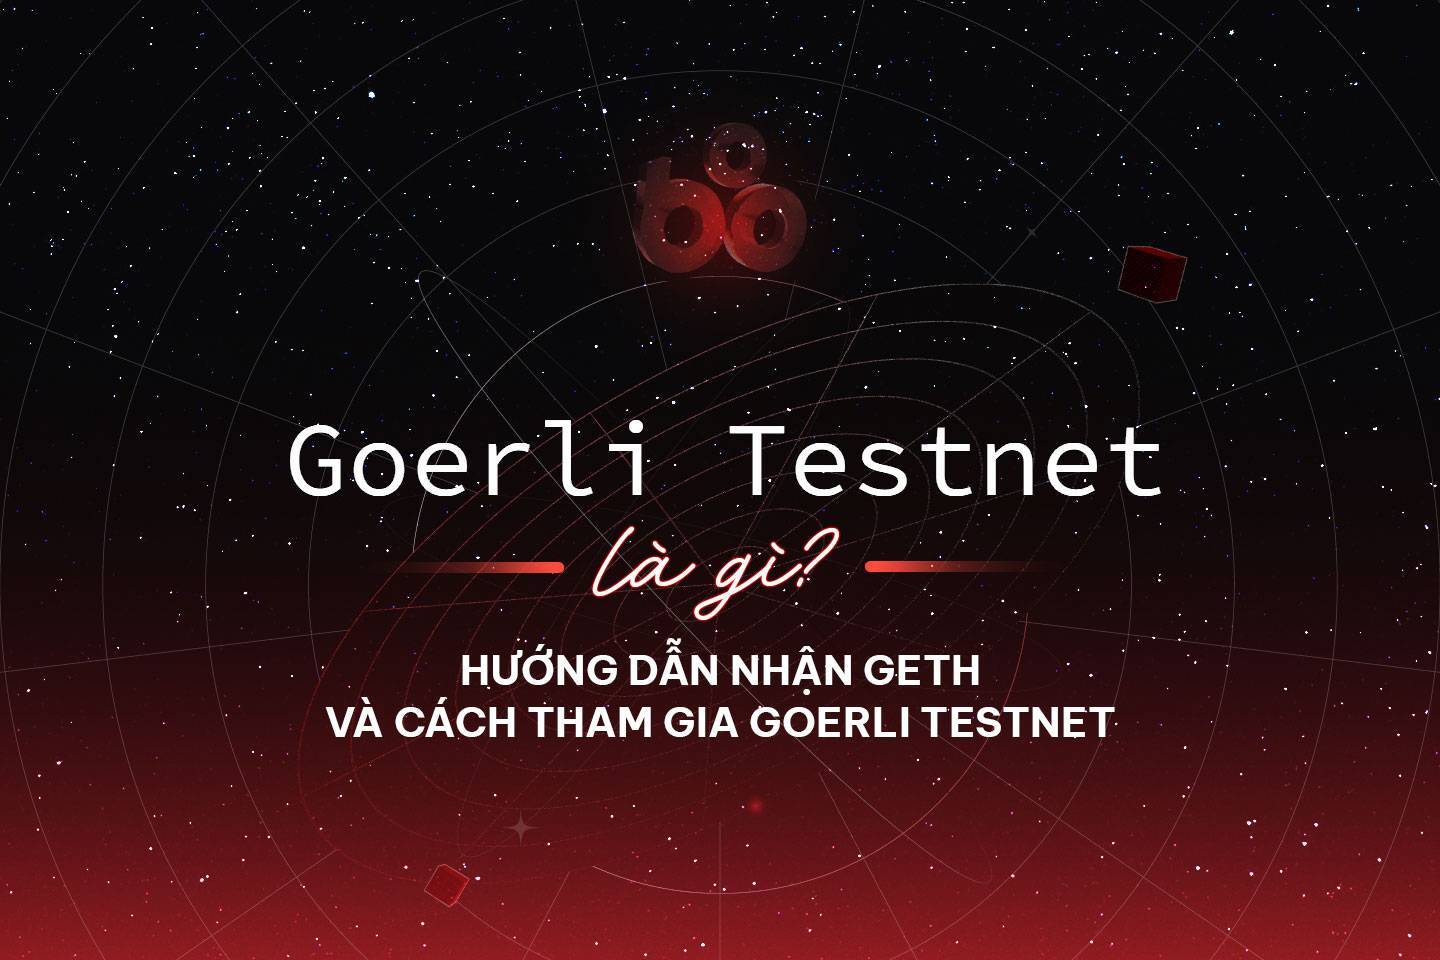 Goerli testnet là gì?